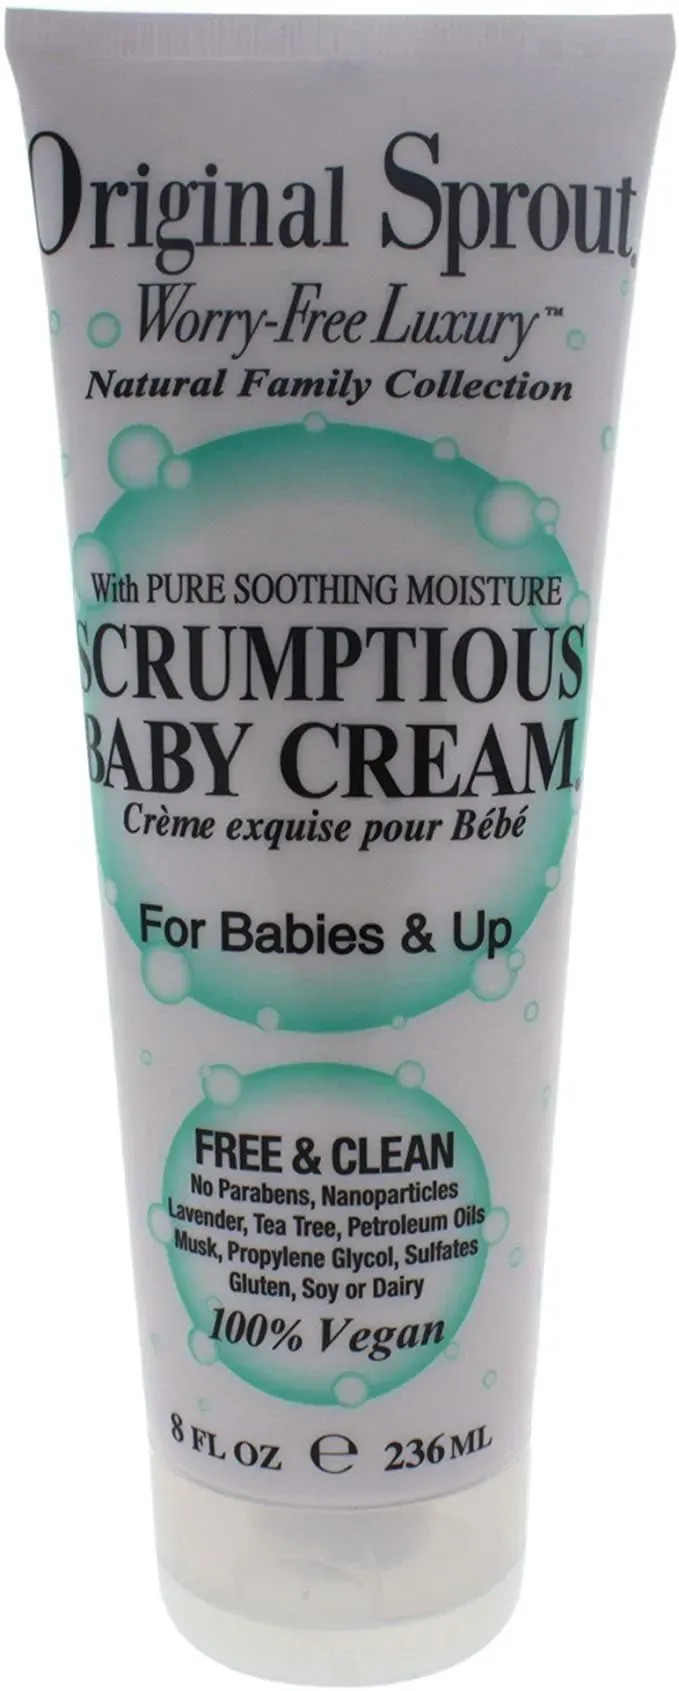 Original Sprout Scrumptious Baby Cream.